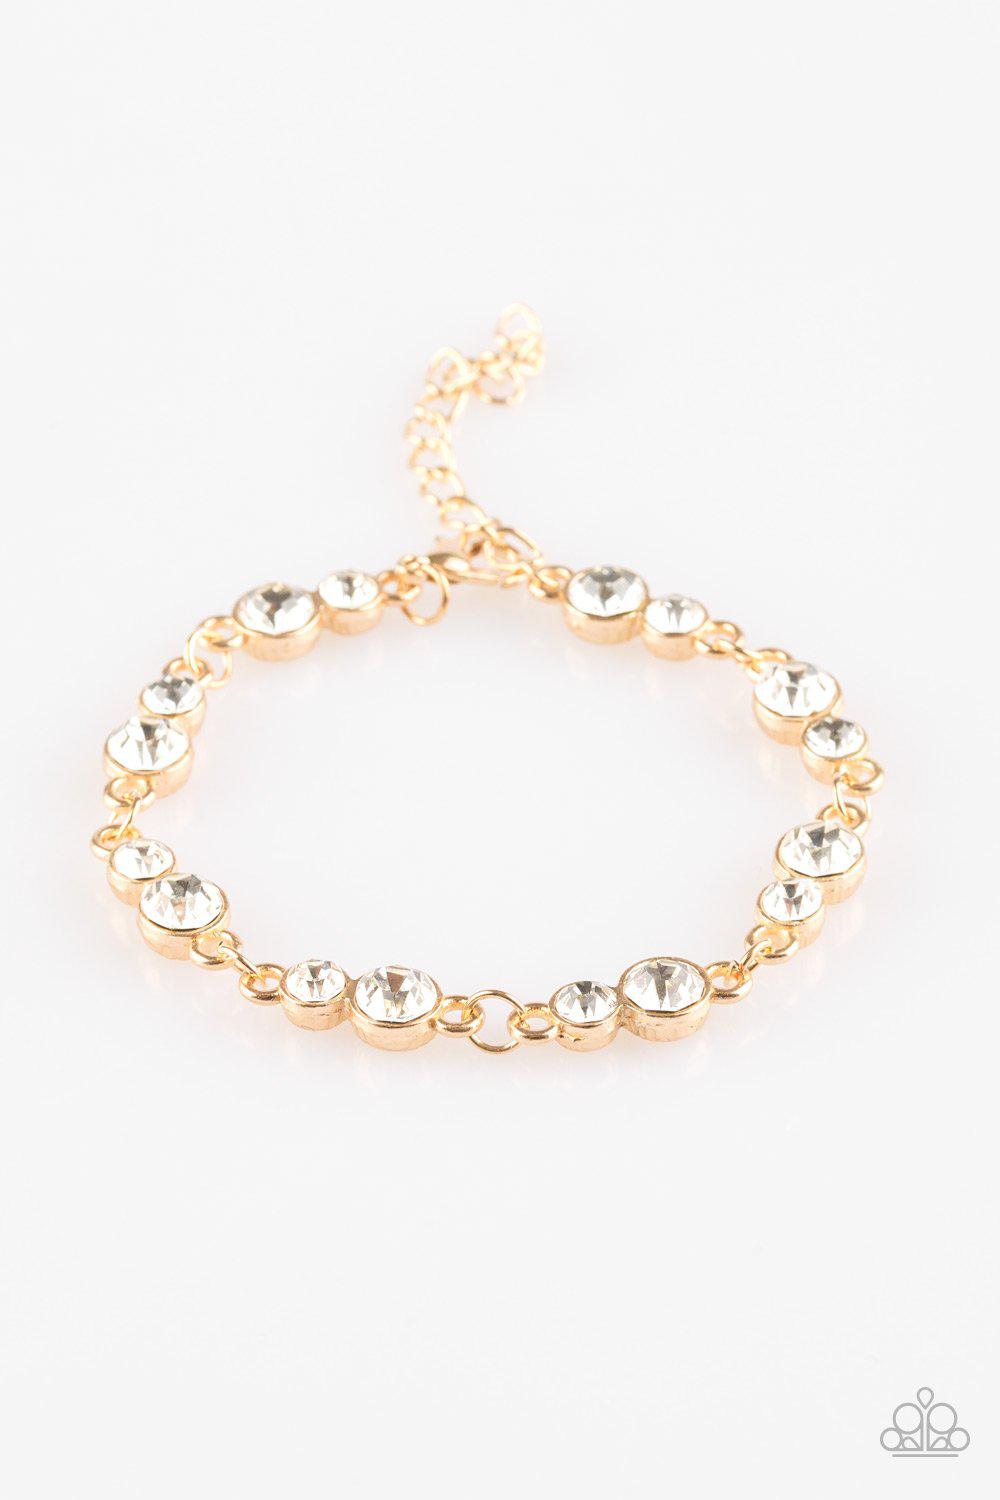 Twinkle Twinkle Little Starlet Gold Bracelet - Paparazzi Accessories-CarasShop.com - $5 Jewelry by Cara Jewels